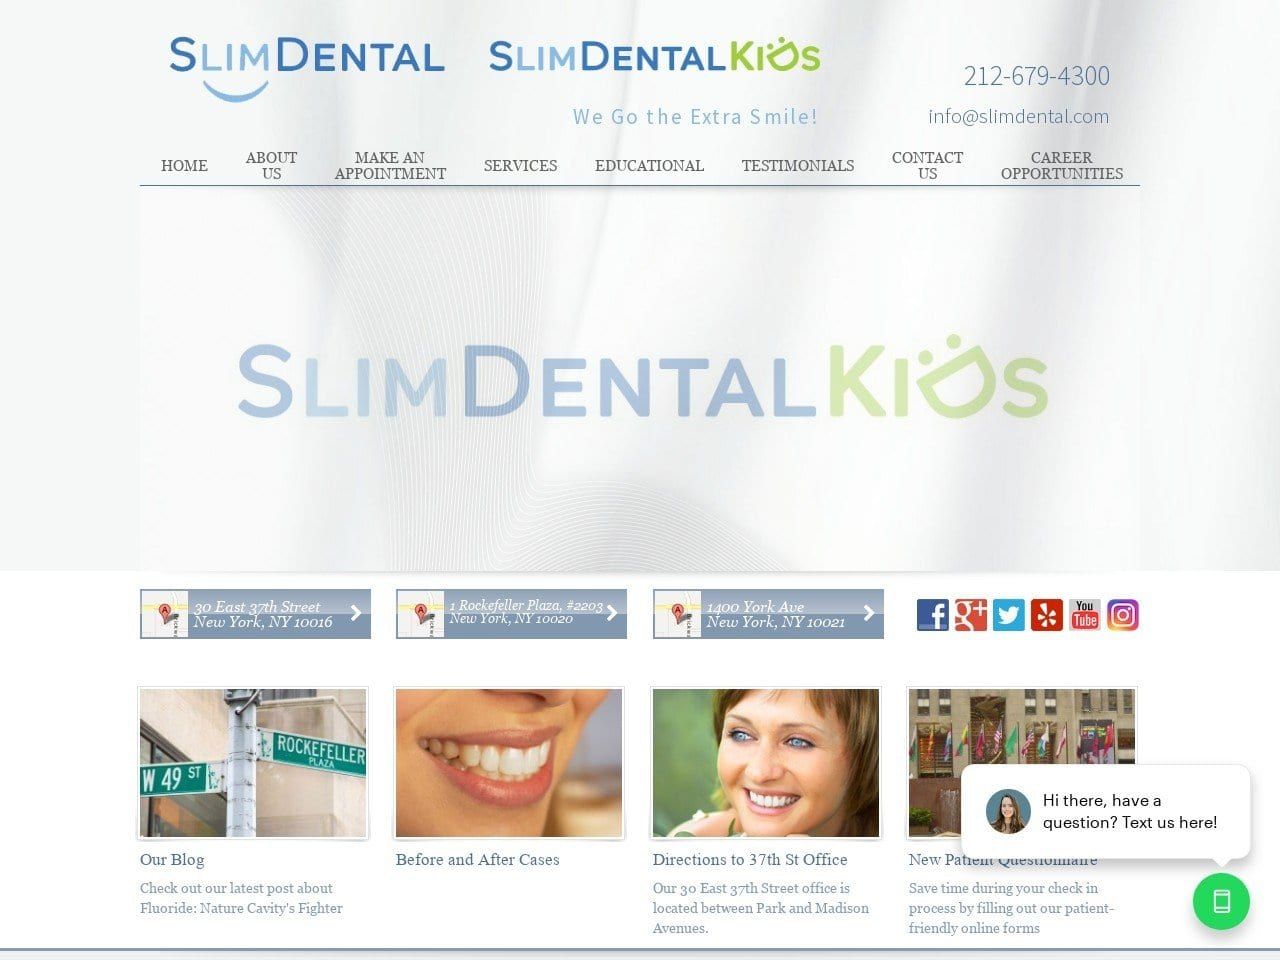 Stephen Lim DDS & Associates Website Screenshot from stephenlimdds.com